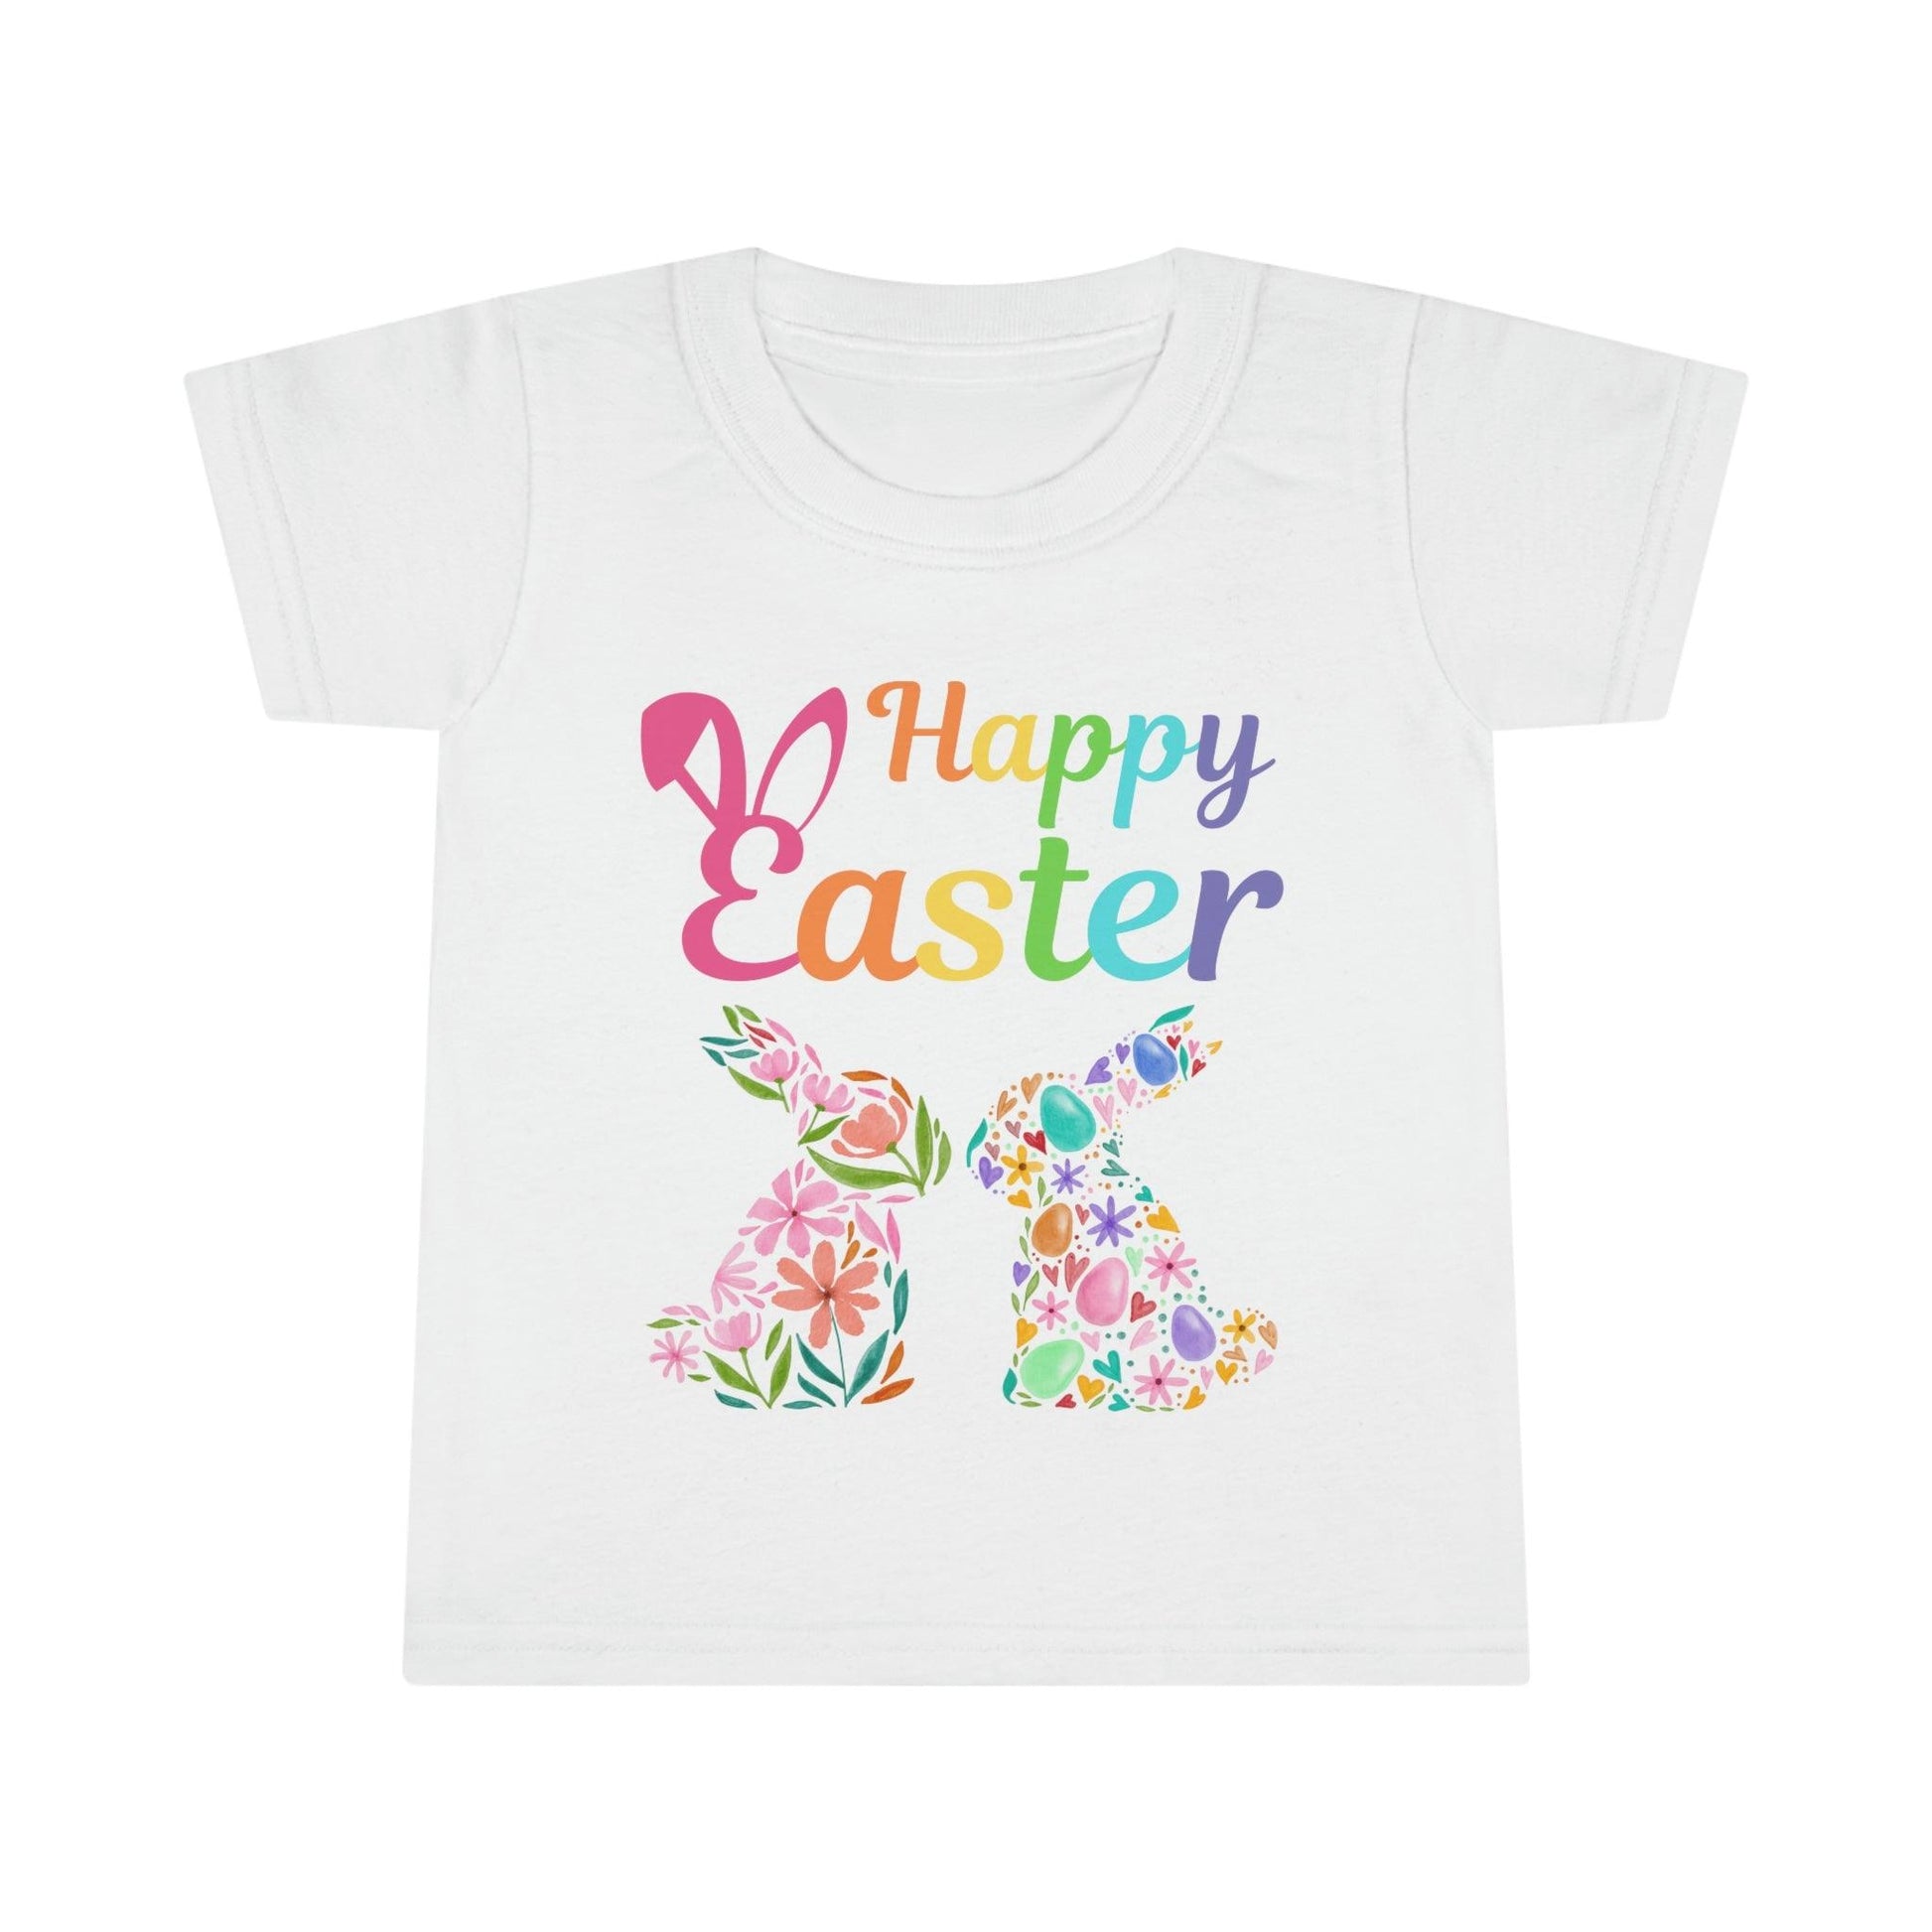 Baby girl easter shirt Baby boy easter shirt toddler easter Toddler T-shirt baby easter outfit first communion gift happy Easter Shirt gift - Giftsmojo